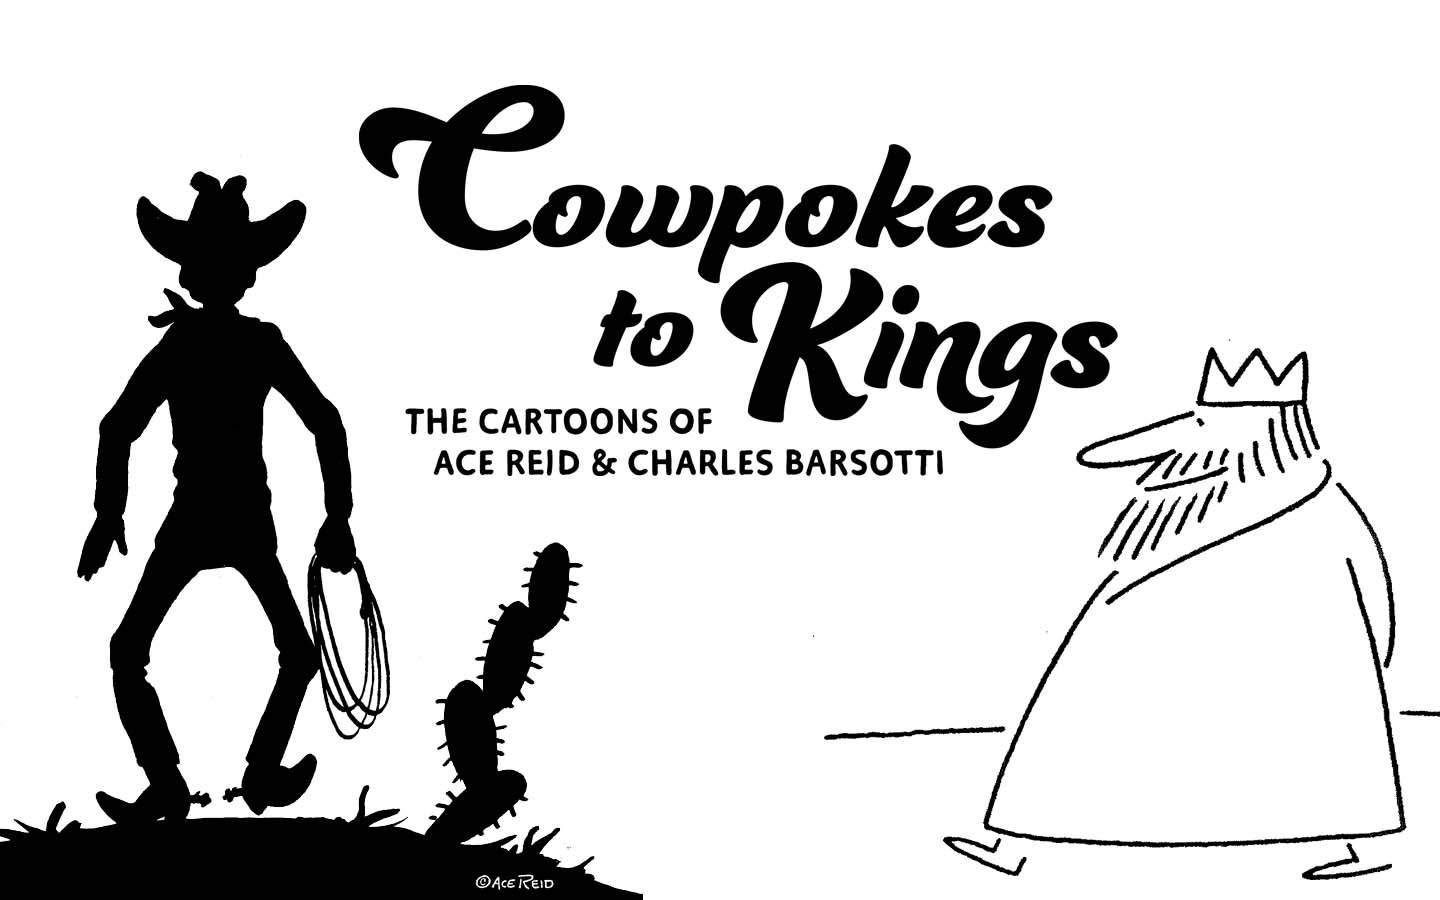 Cowpokes To Kings logo